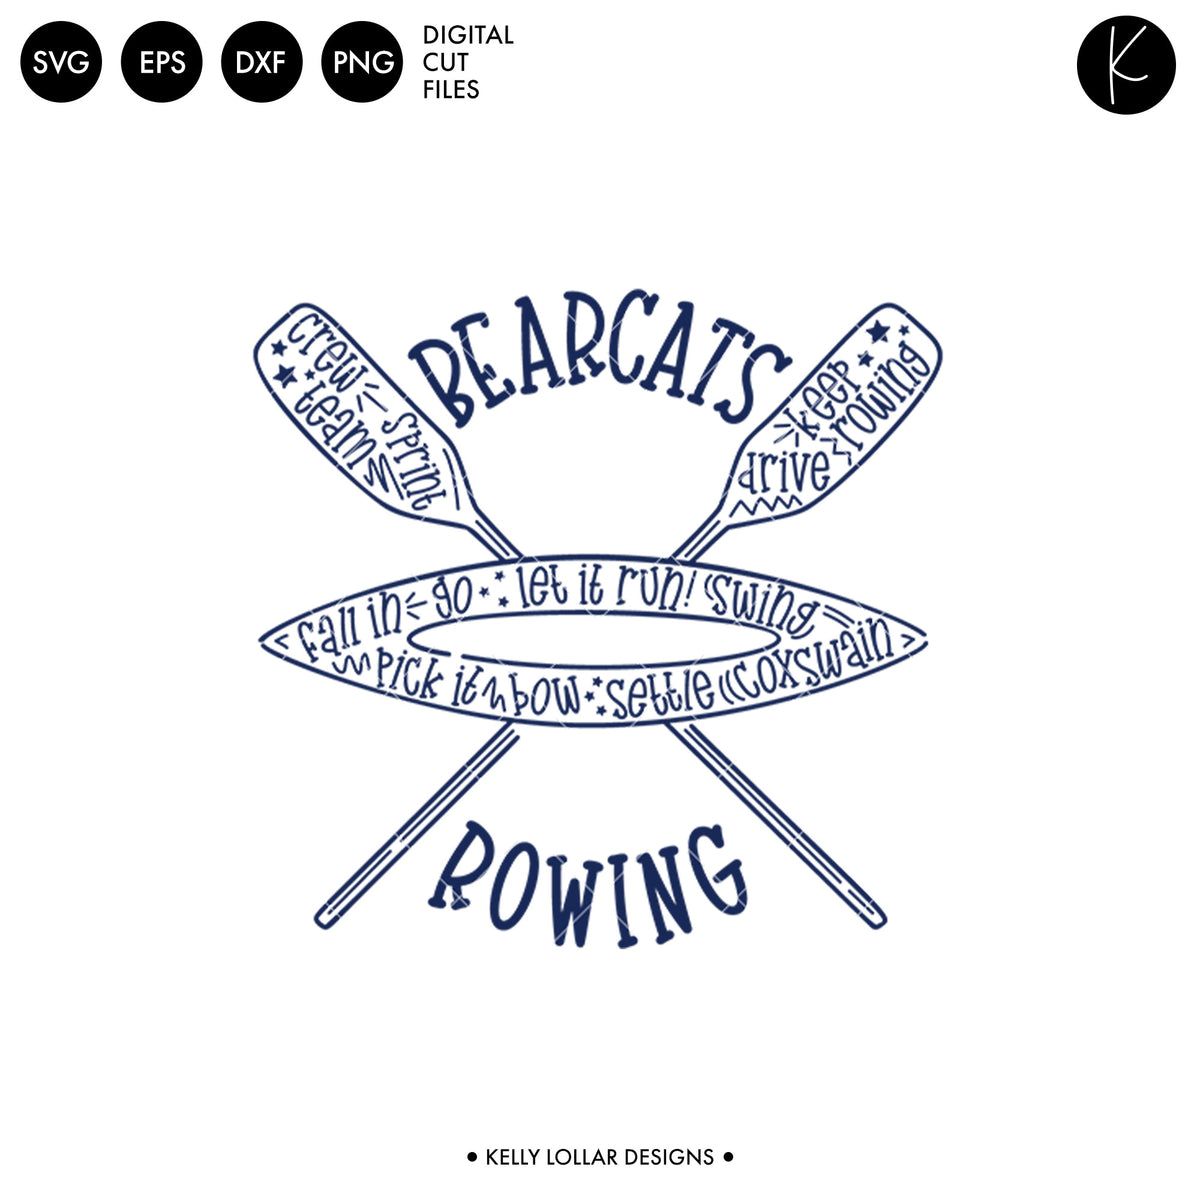 Bearcats Rowing Crew Bundle | SVG DXF EPS PNG Cut Files